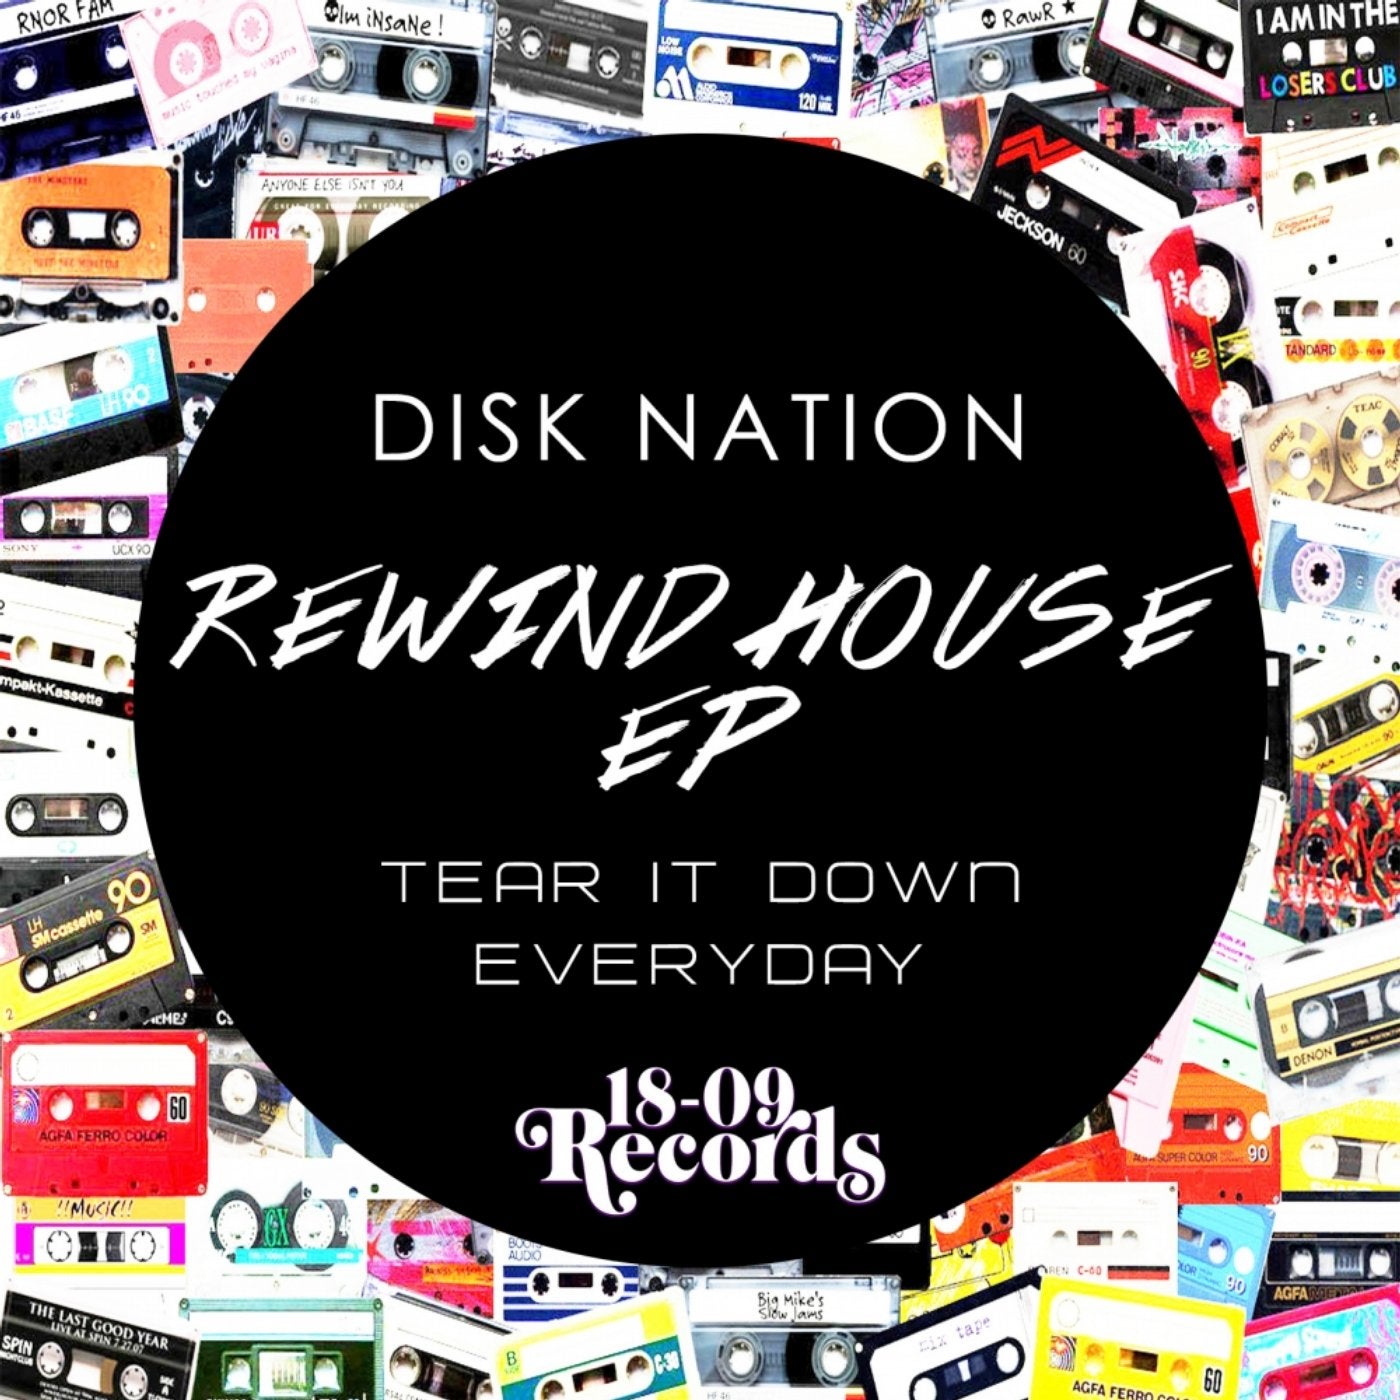 Rewind House EP